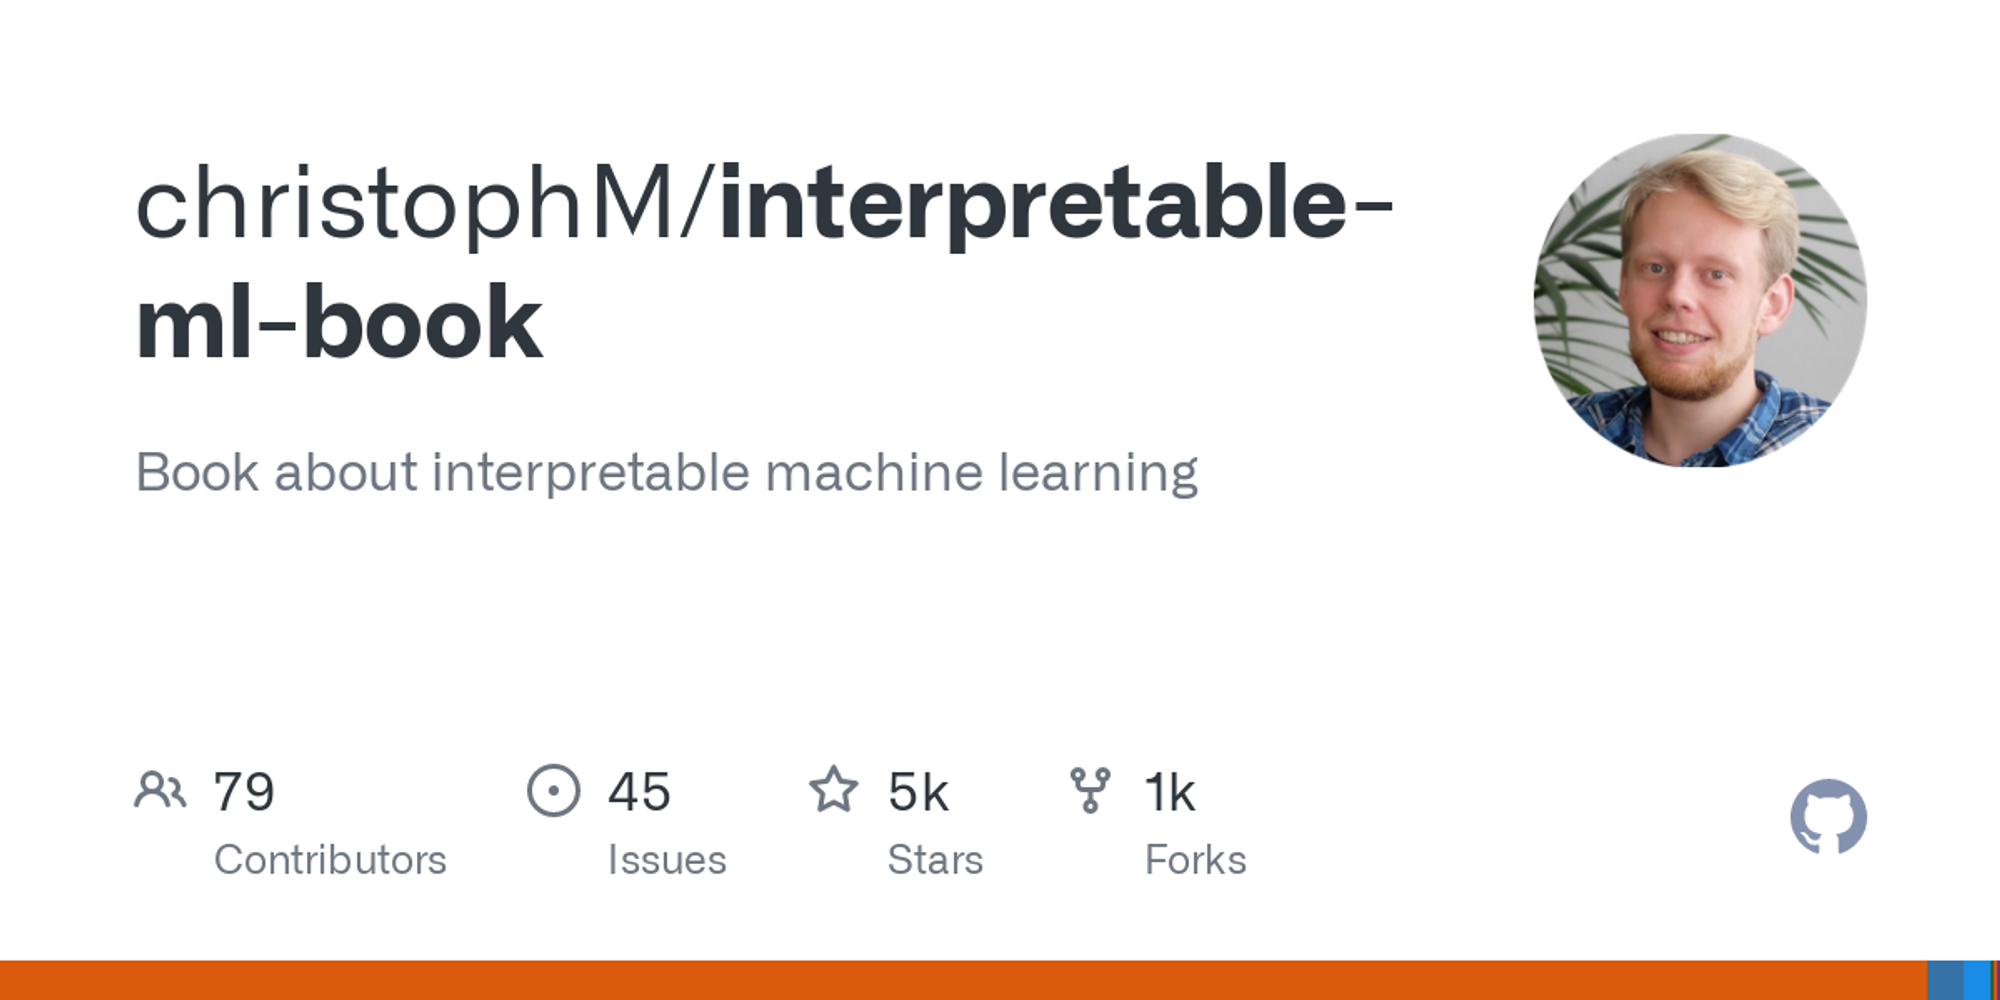 GitHub - christophM/interpretable-ml-book: Book about interpretable machine learning